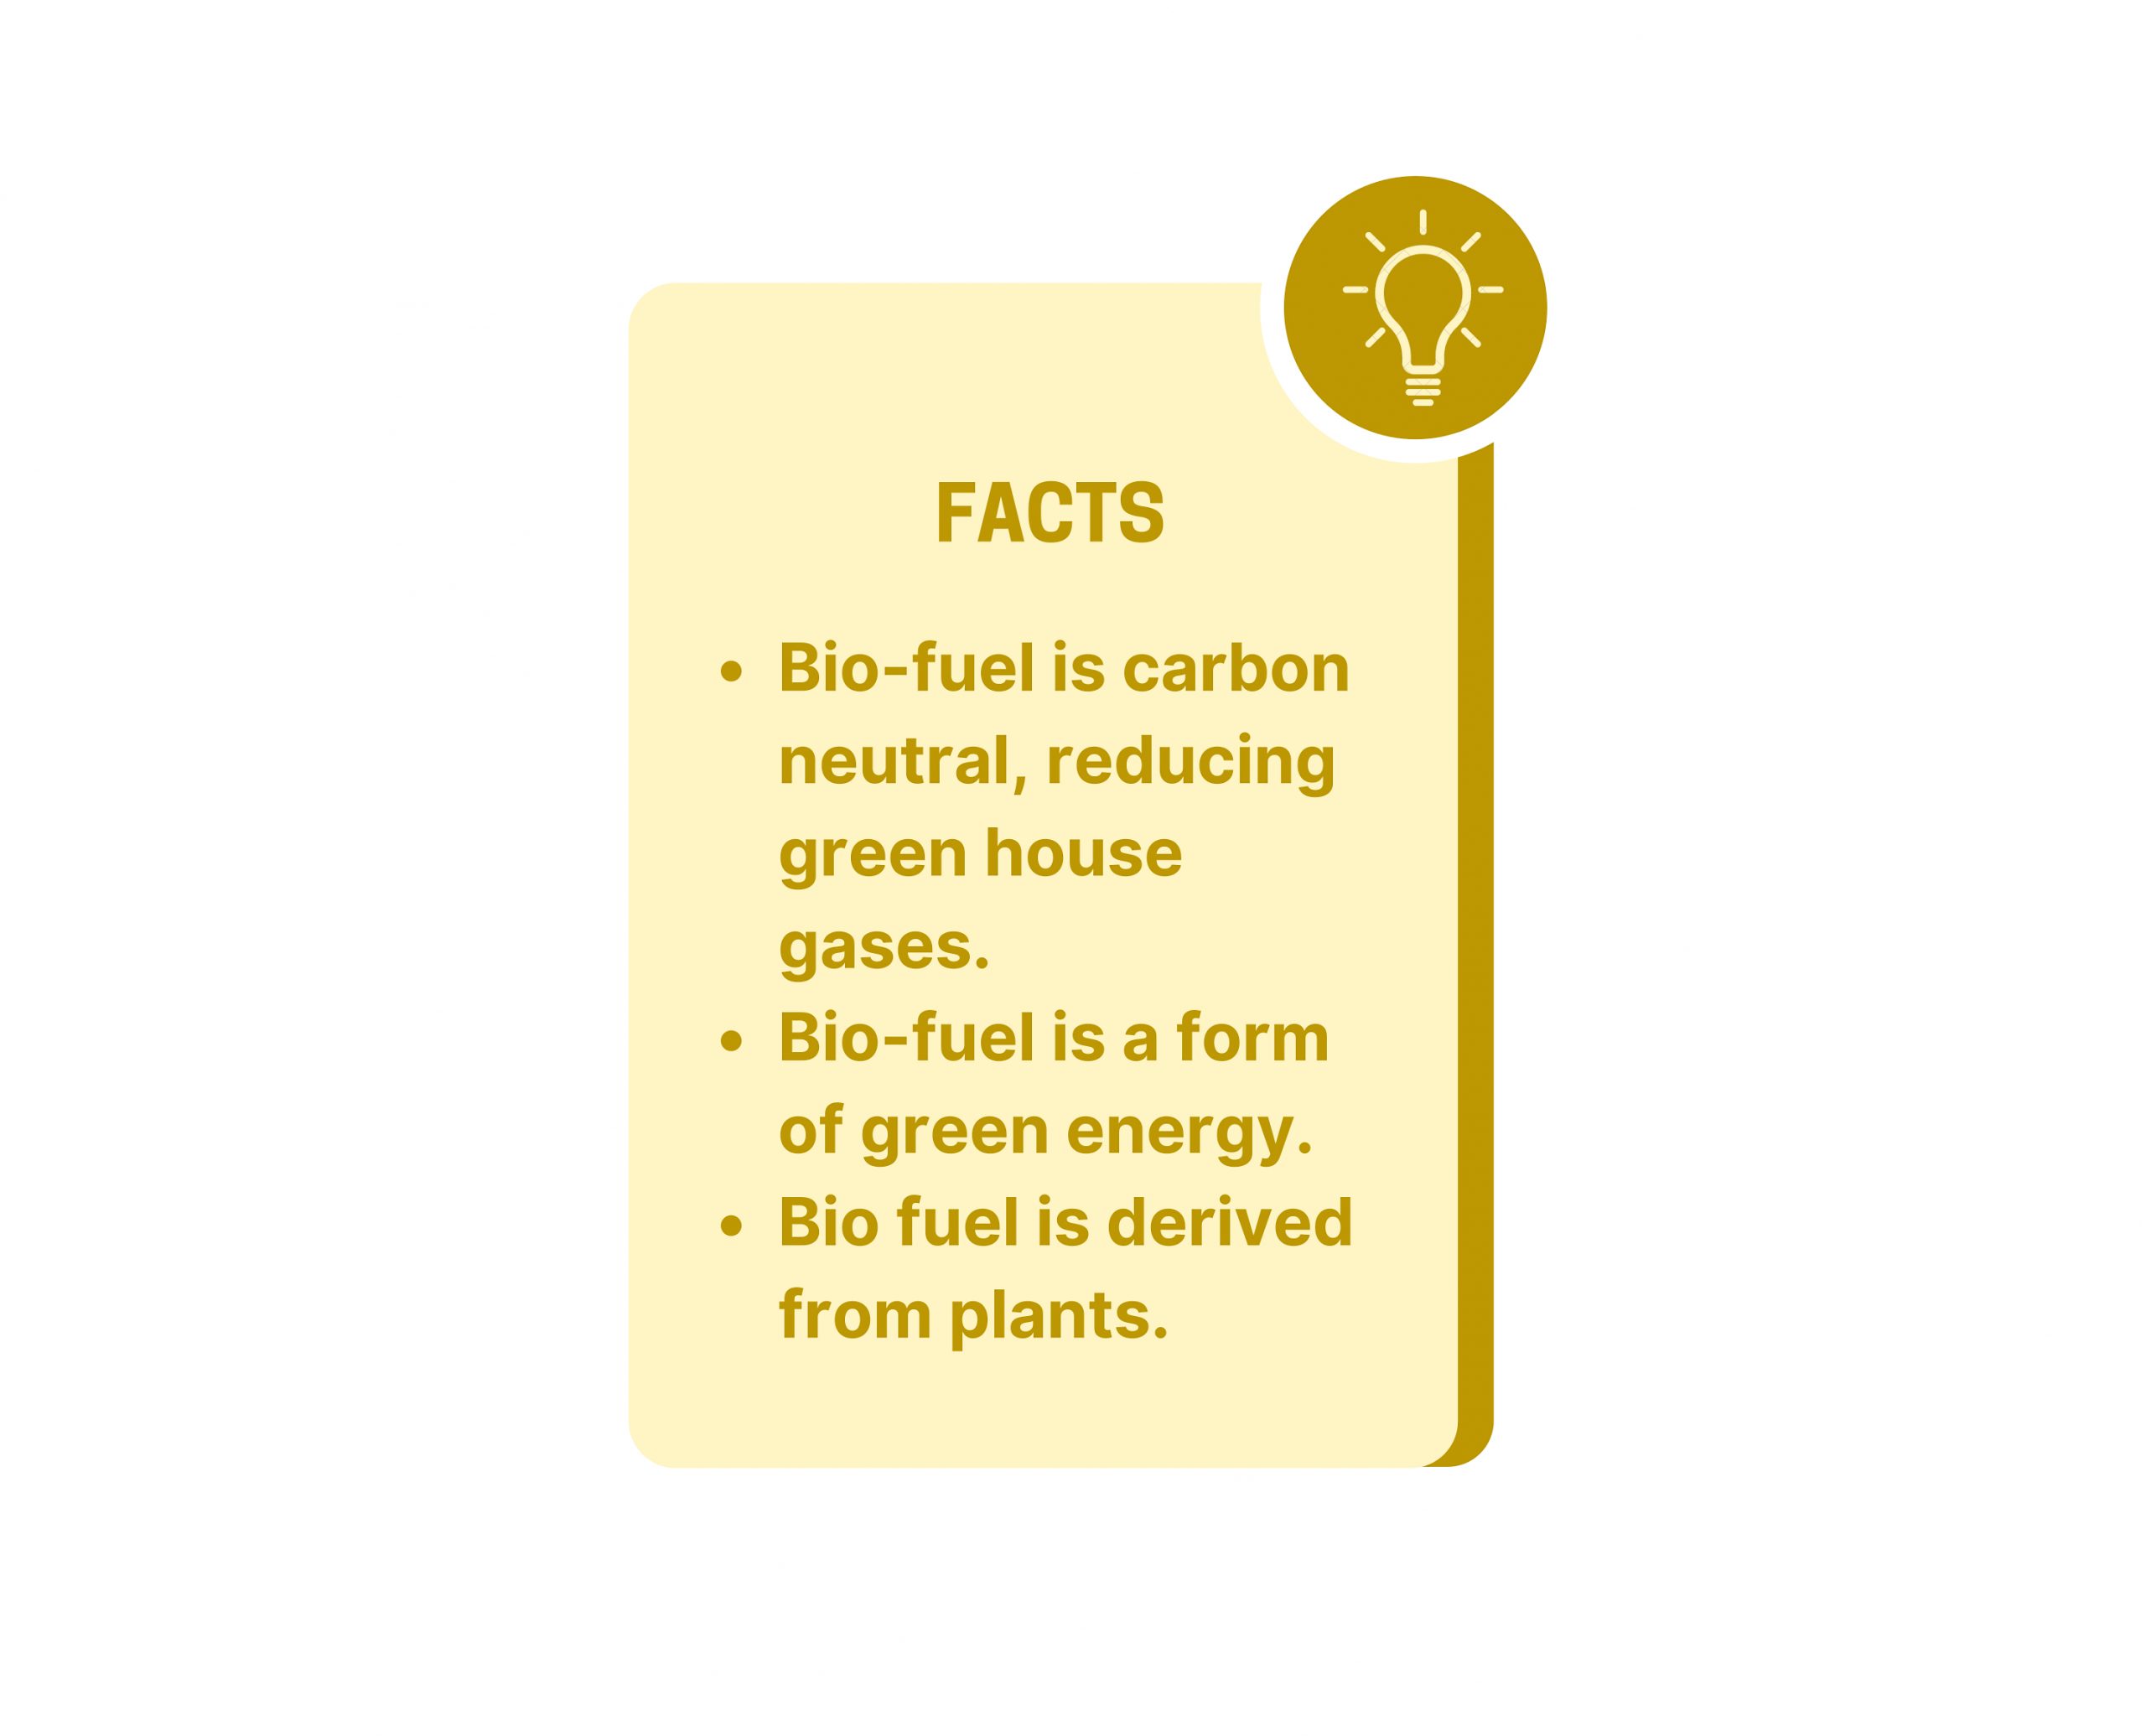 Biofuel facts